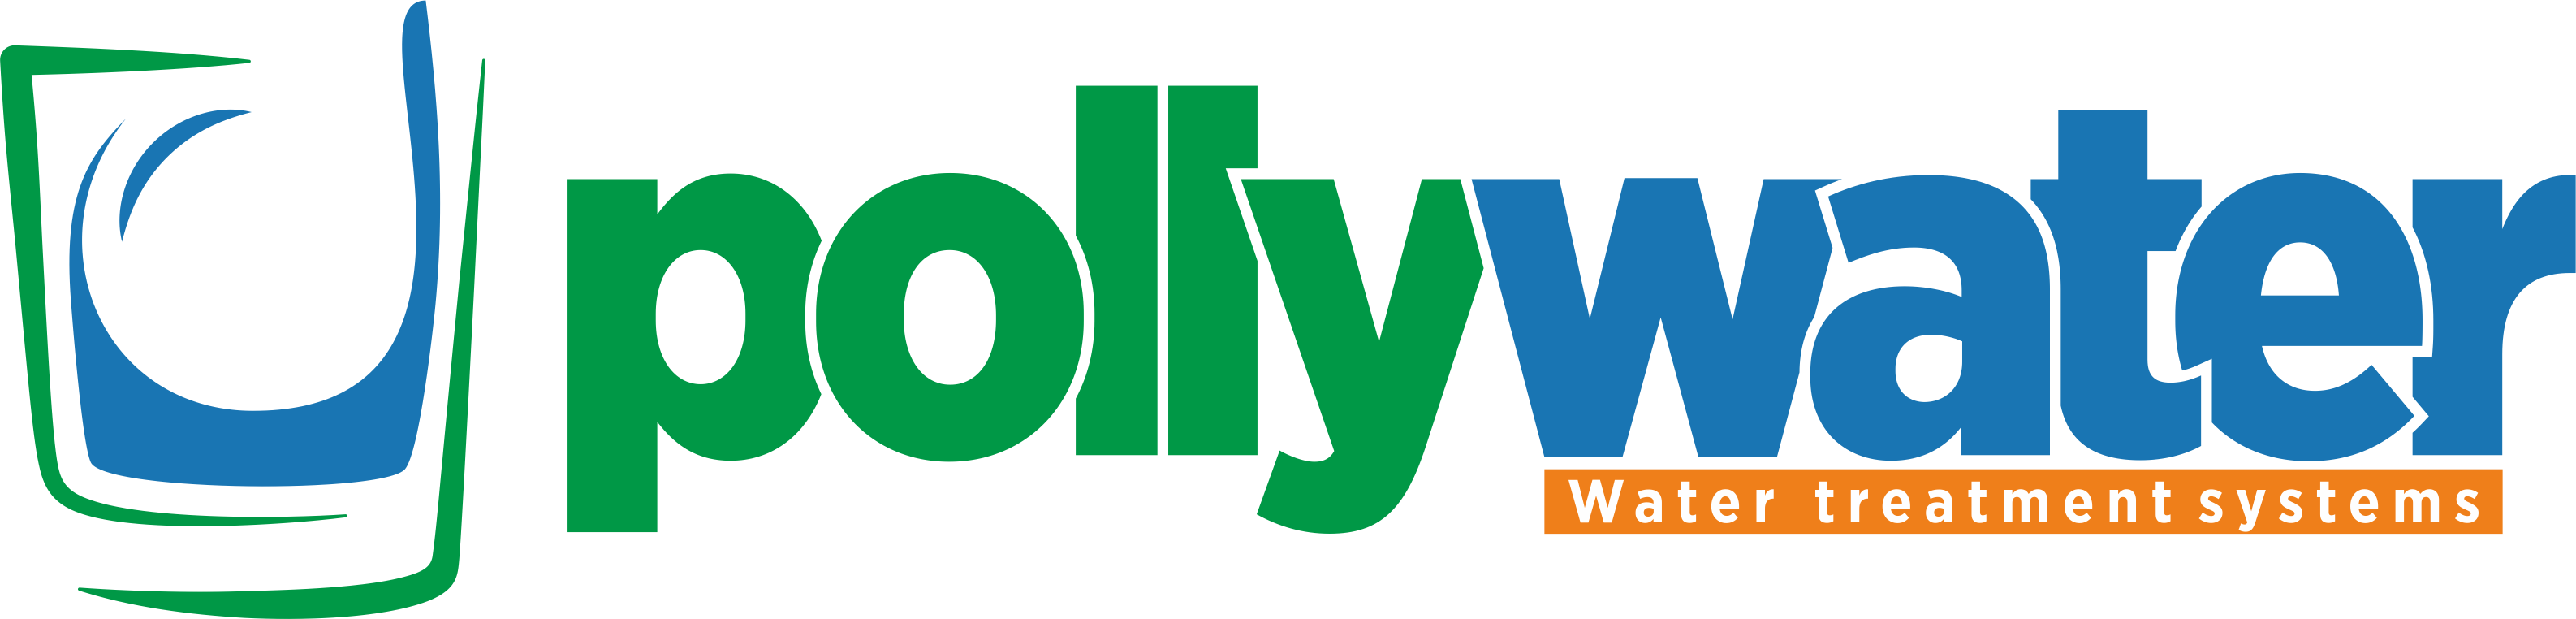 Pollywater logo